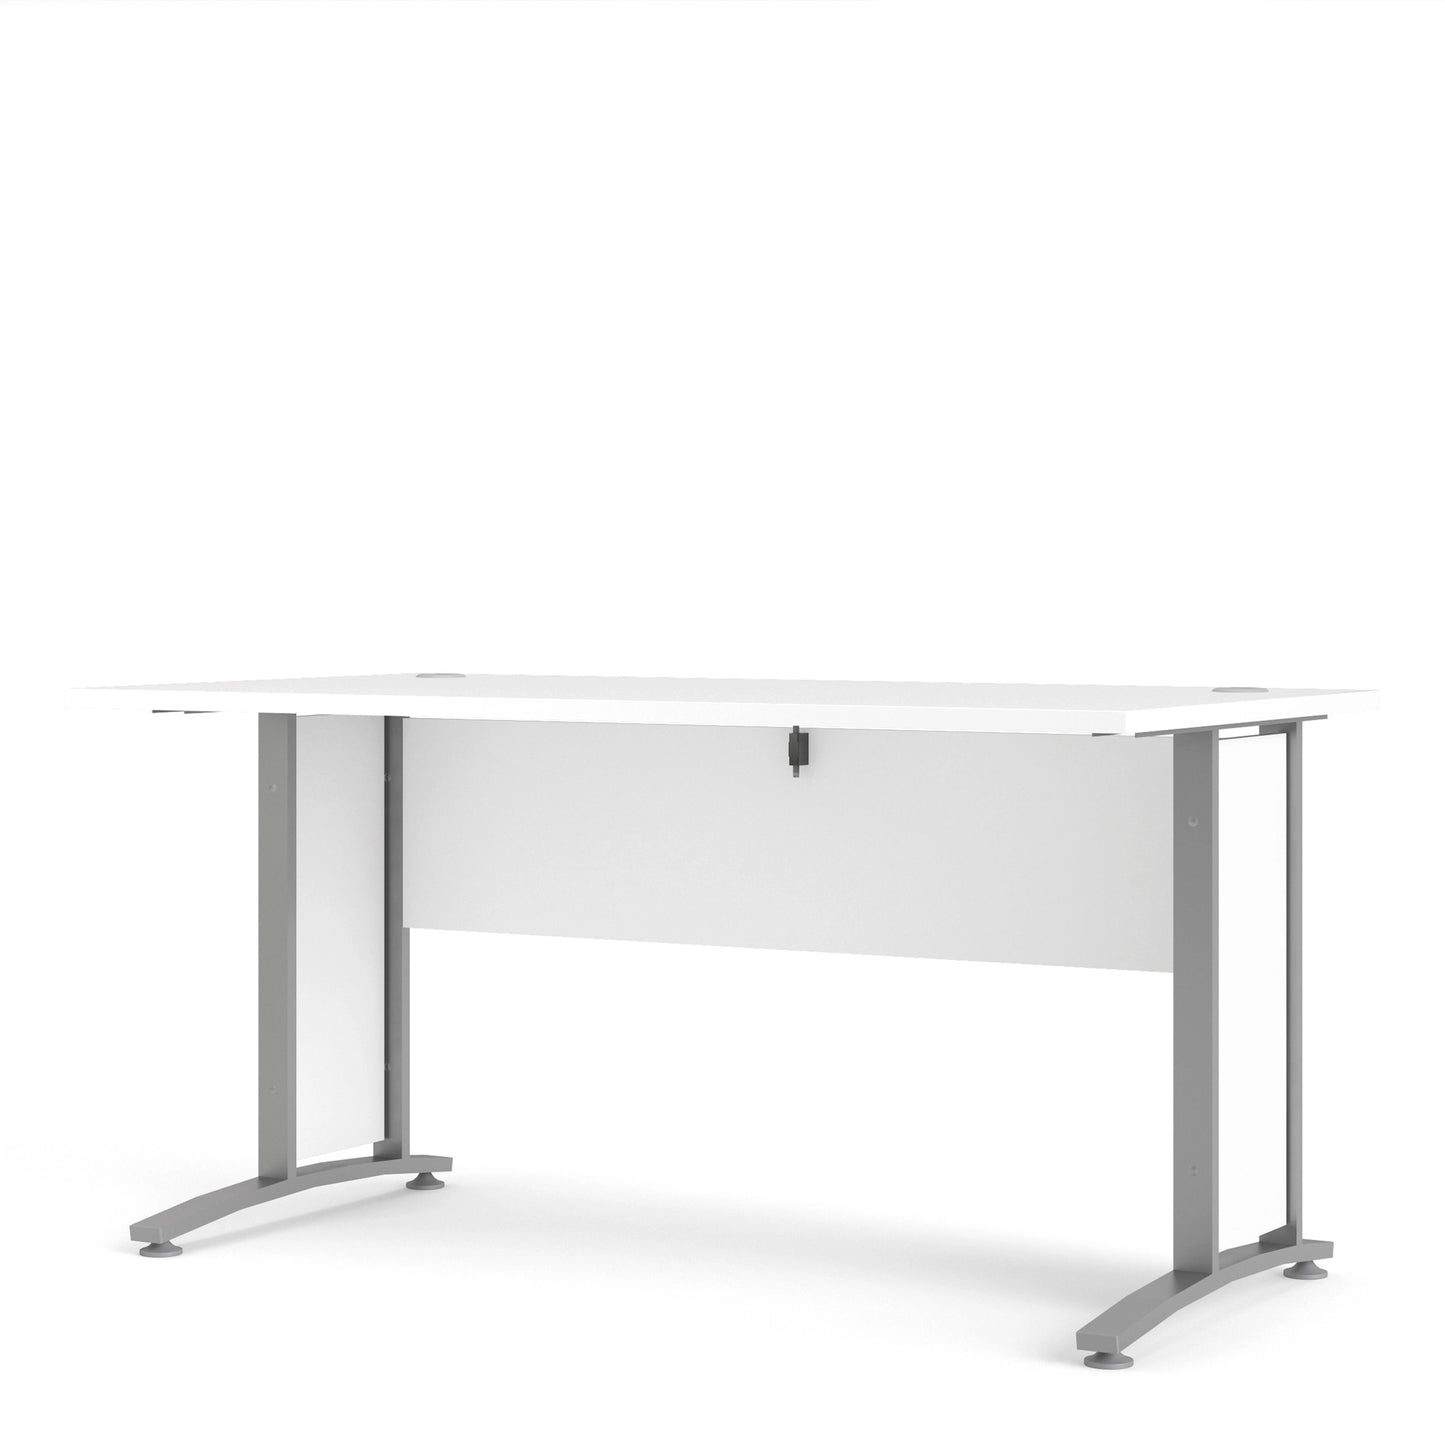 Furniture To Go Prima Desk 150cm in White with Silver Grey Steel Legs